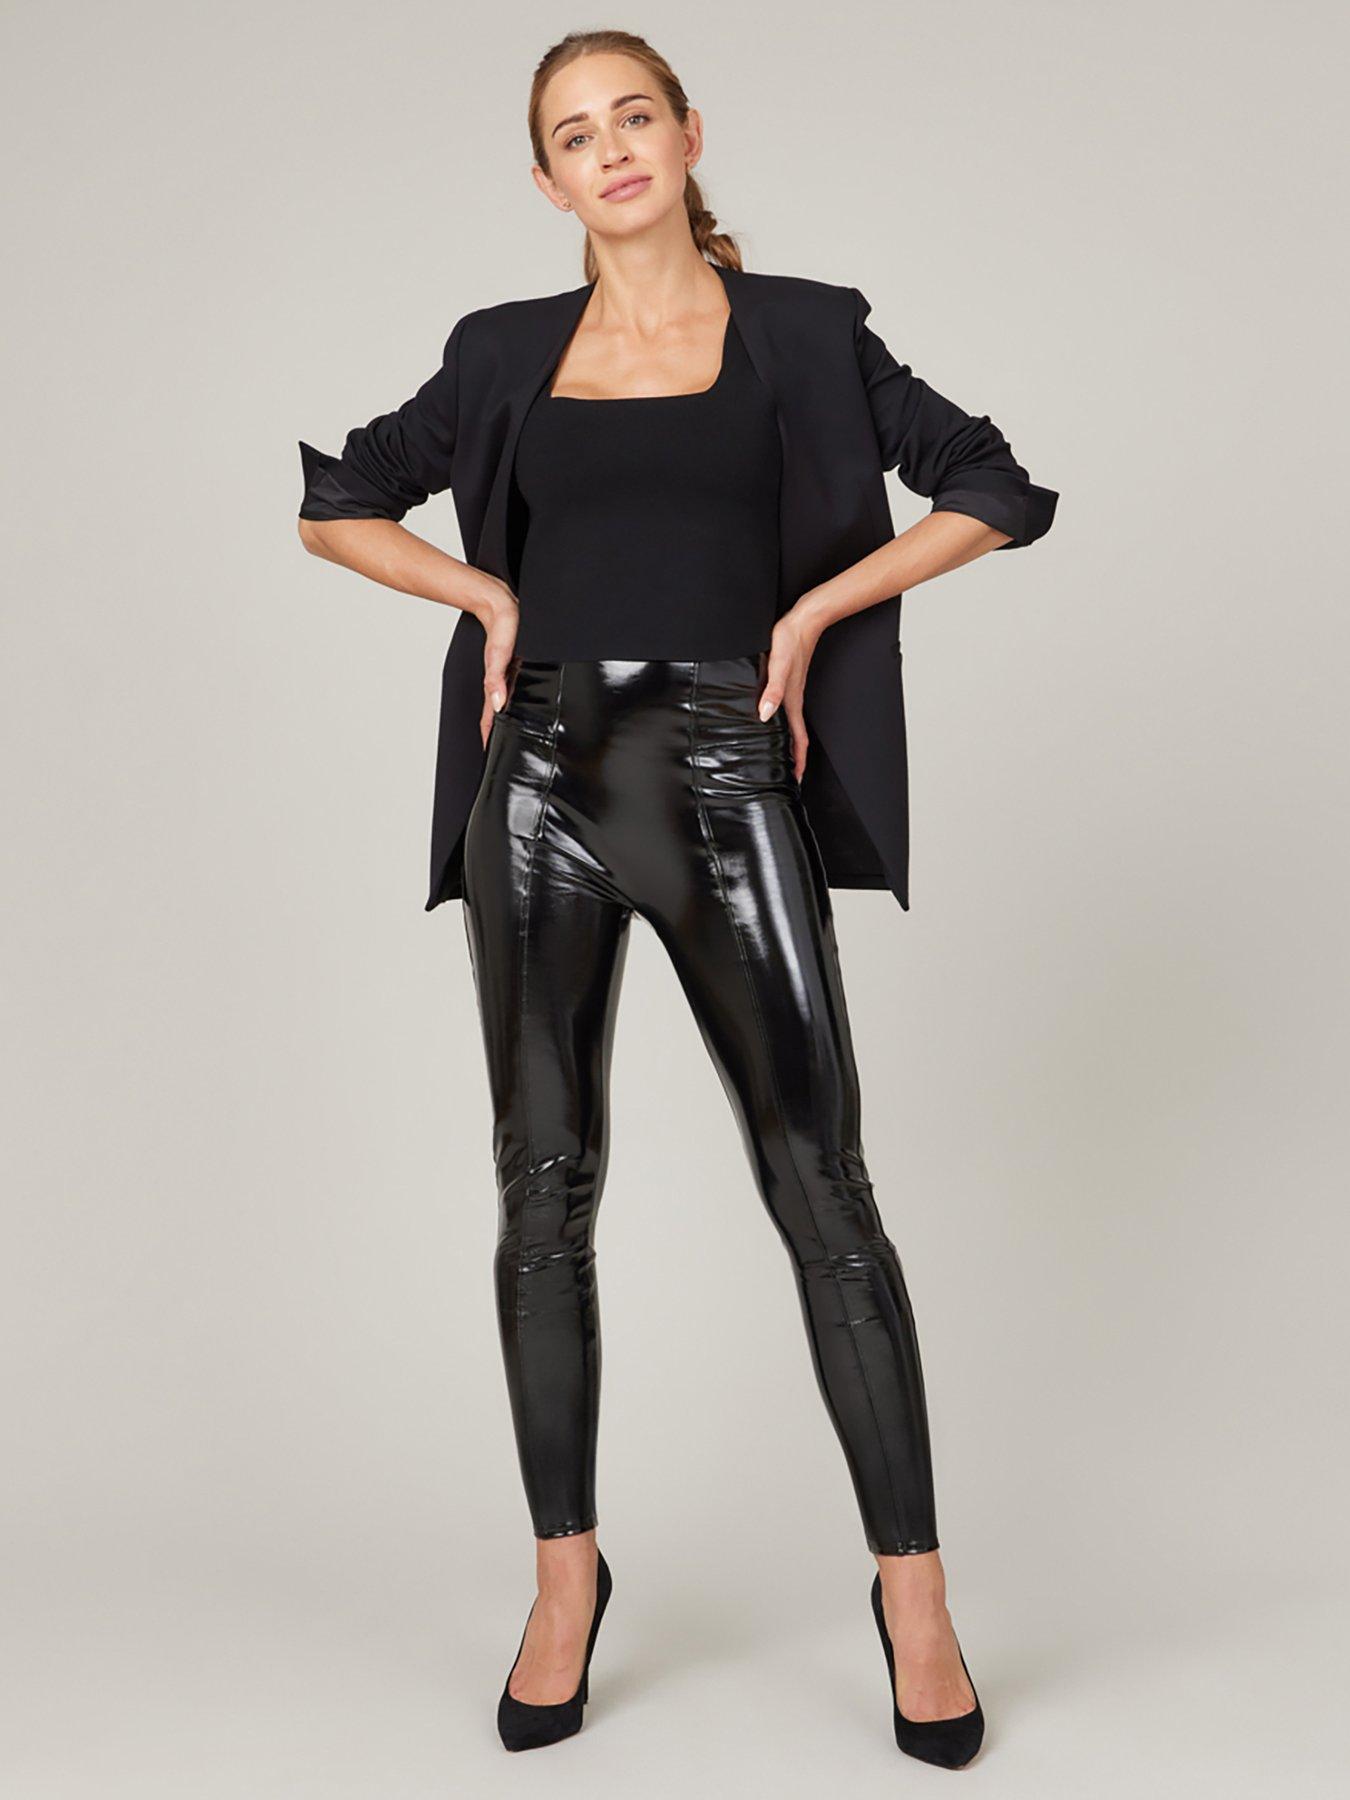 How to Wear Leather Pants Like an Absolute Pro | POPSUGAR Fashion UK